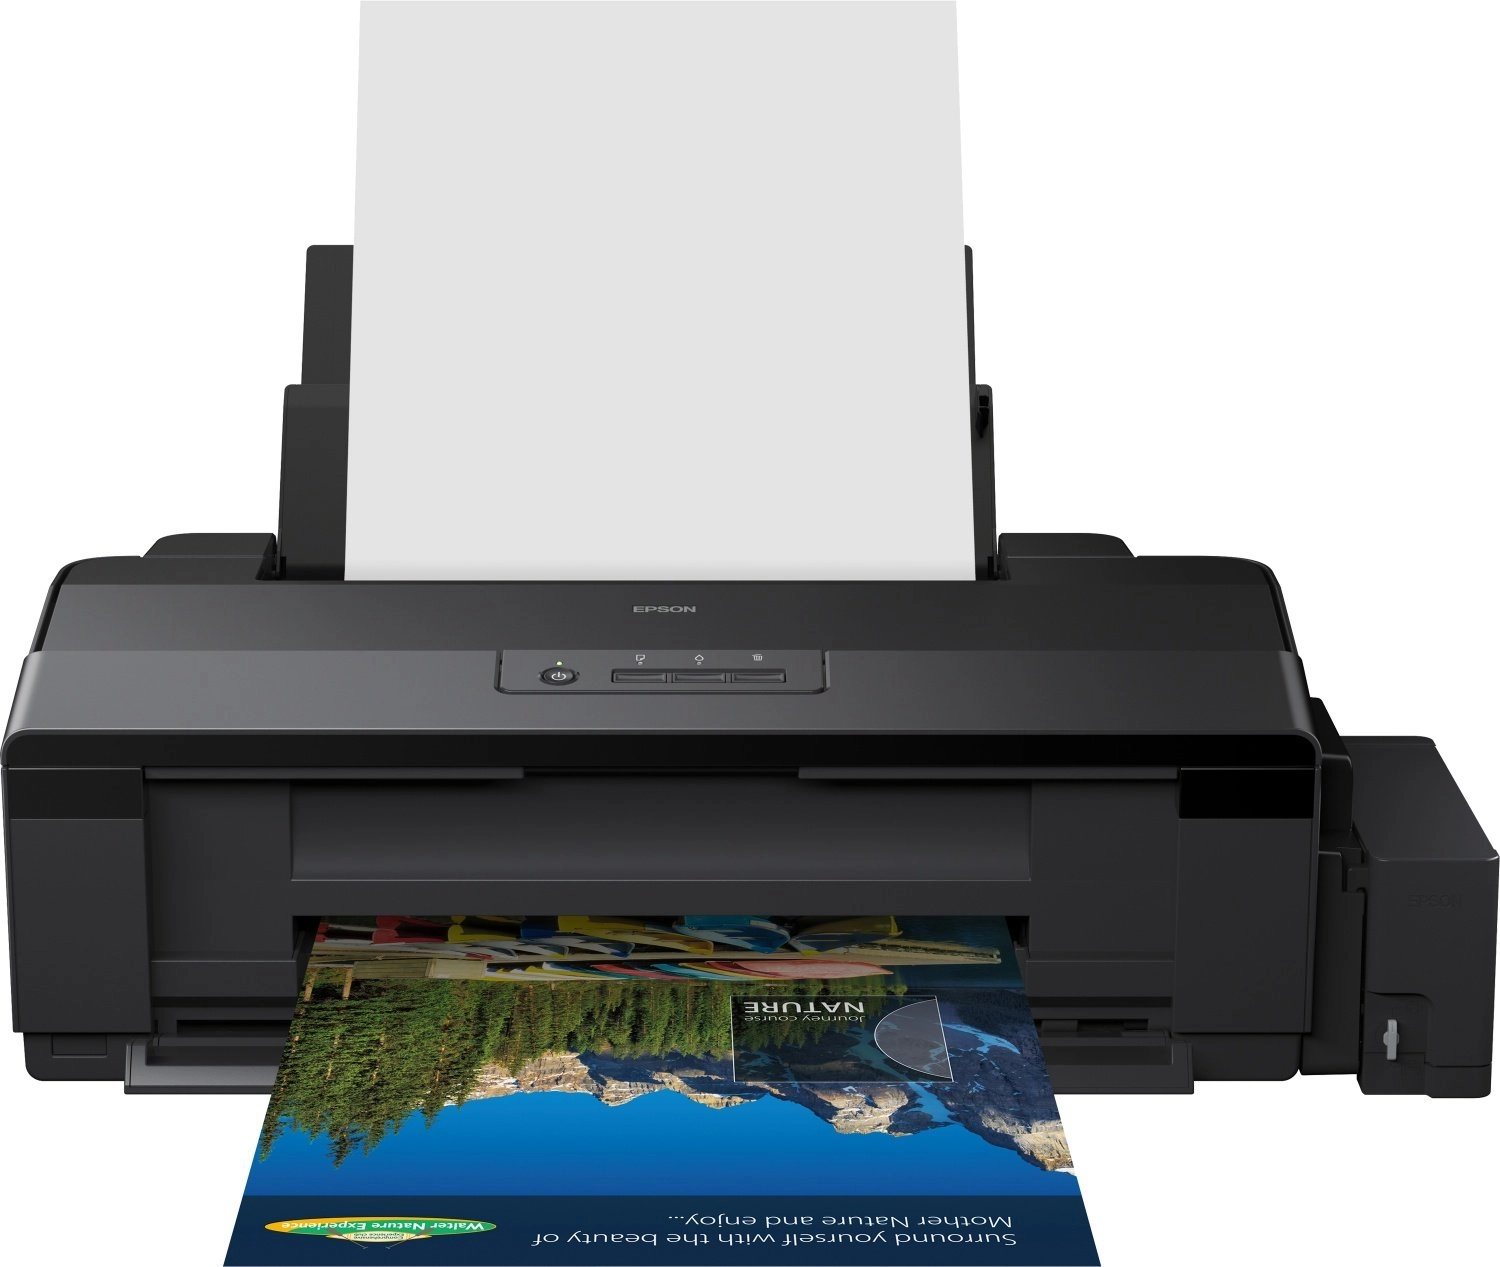 Принтер Epson L1800 (C11CD82402)